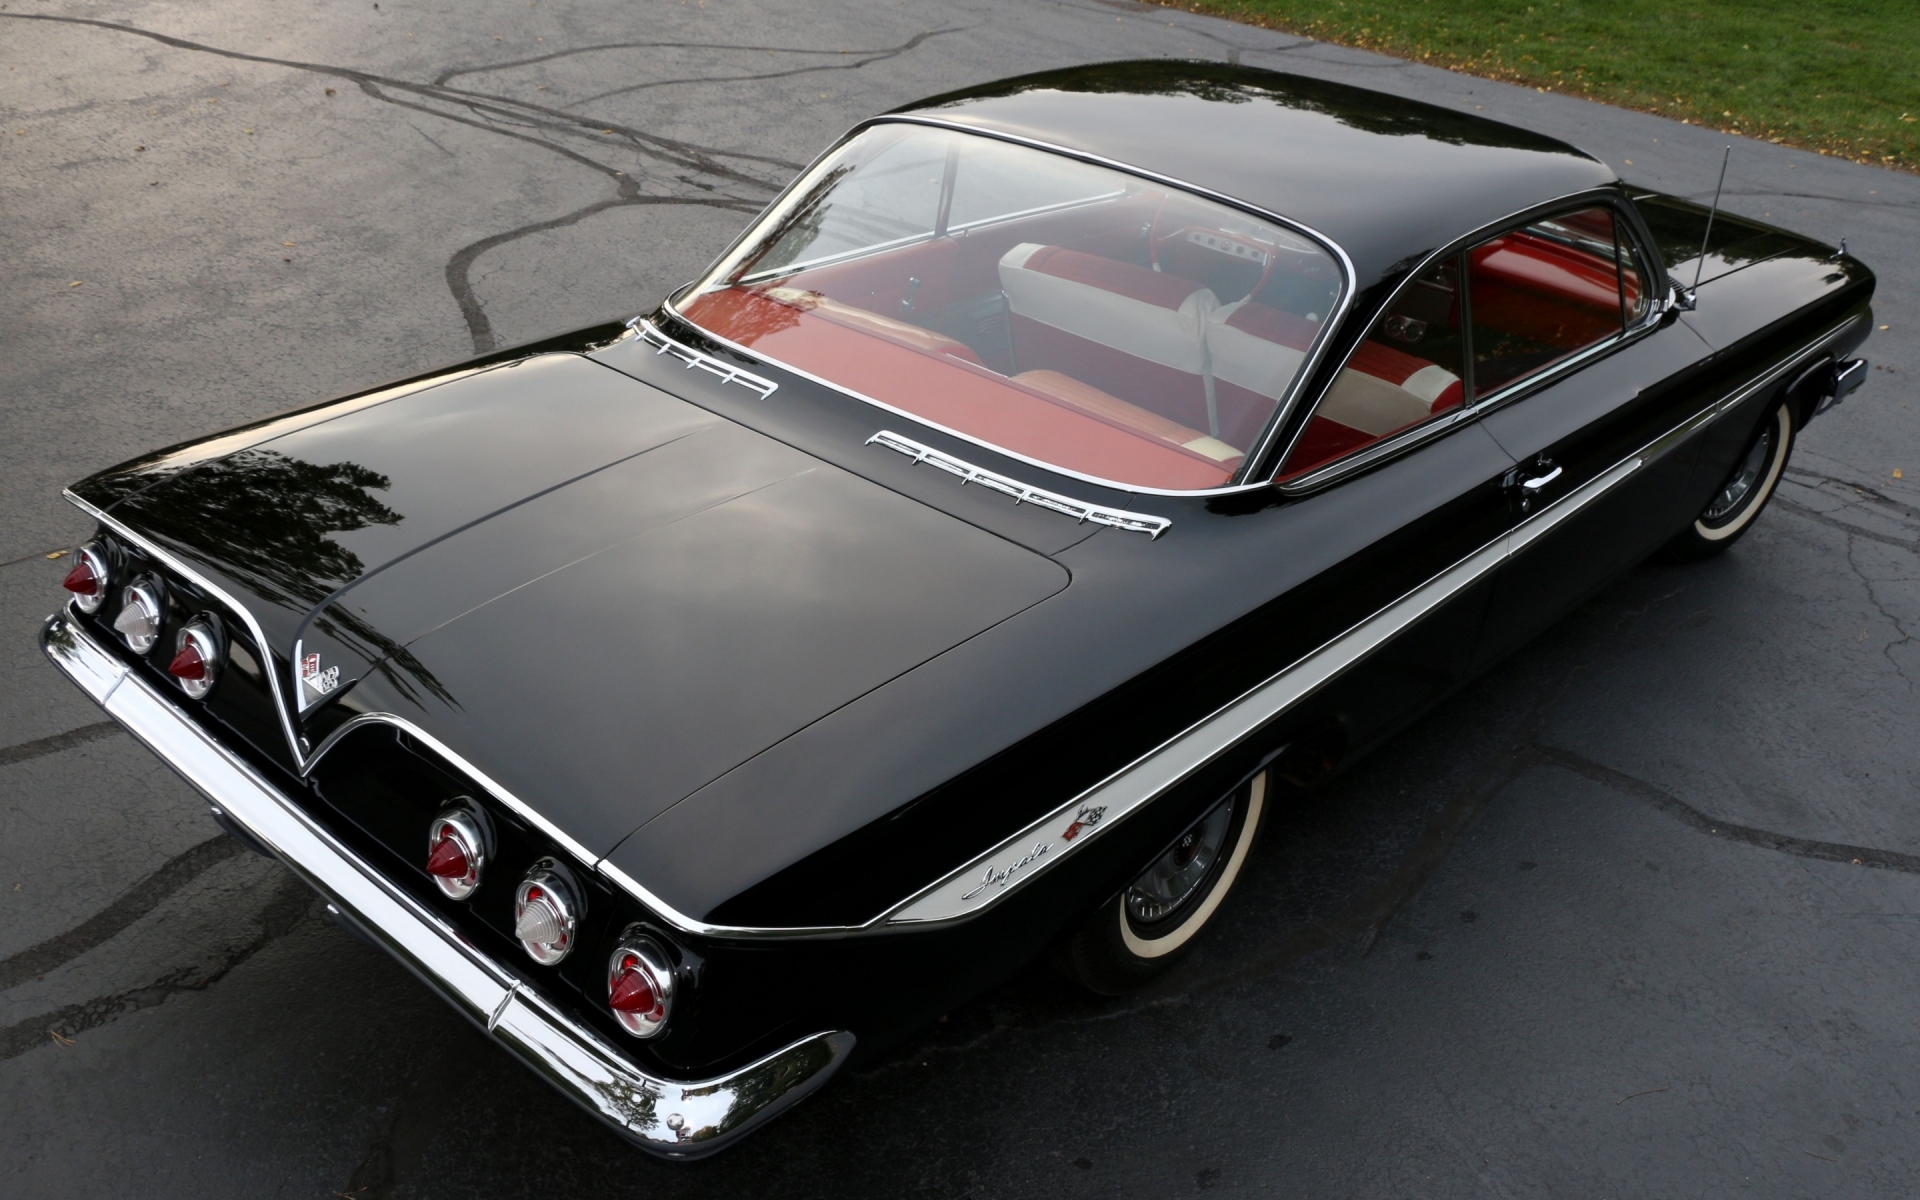 Black Chevrolet Impala 1961 for 1920 x 1200 widescreen resolution